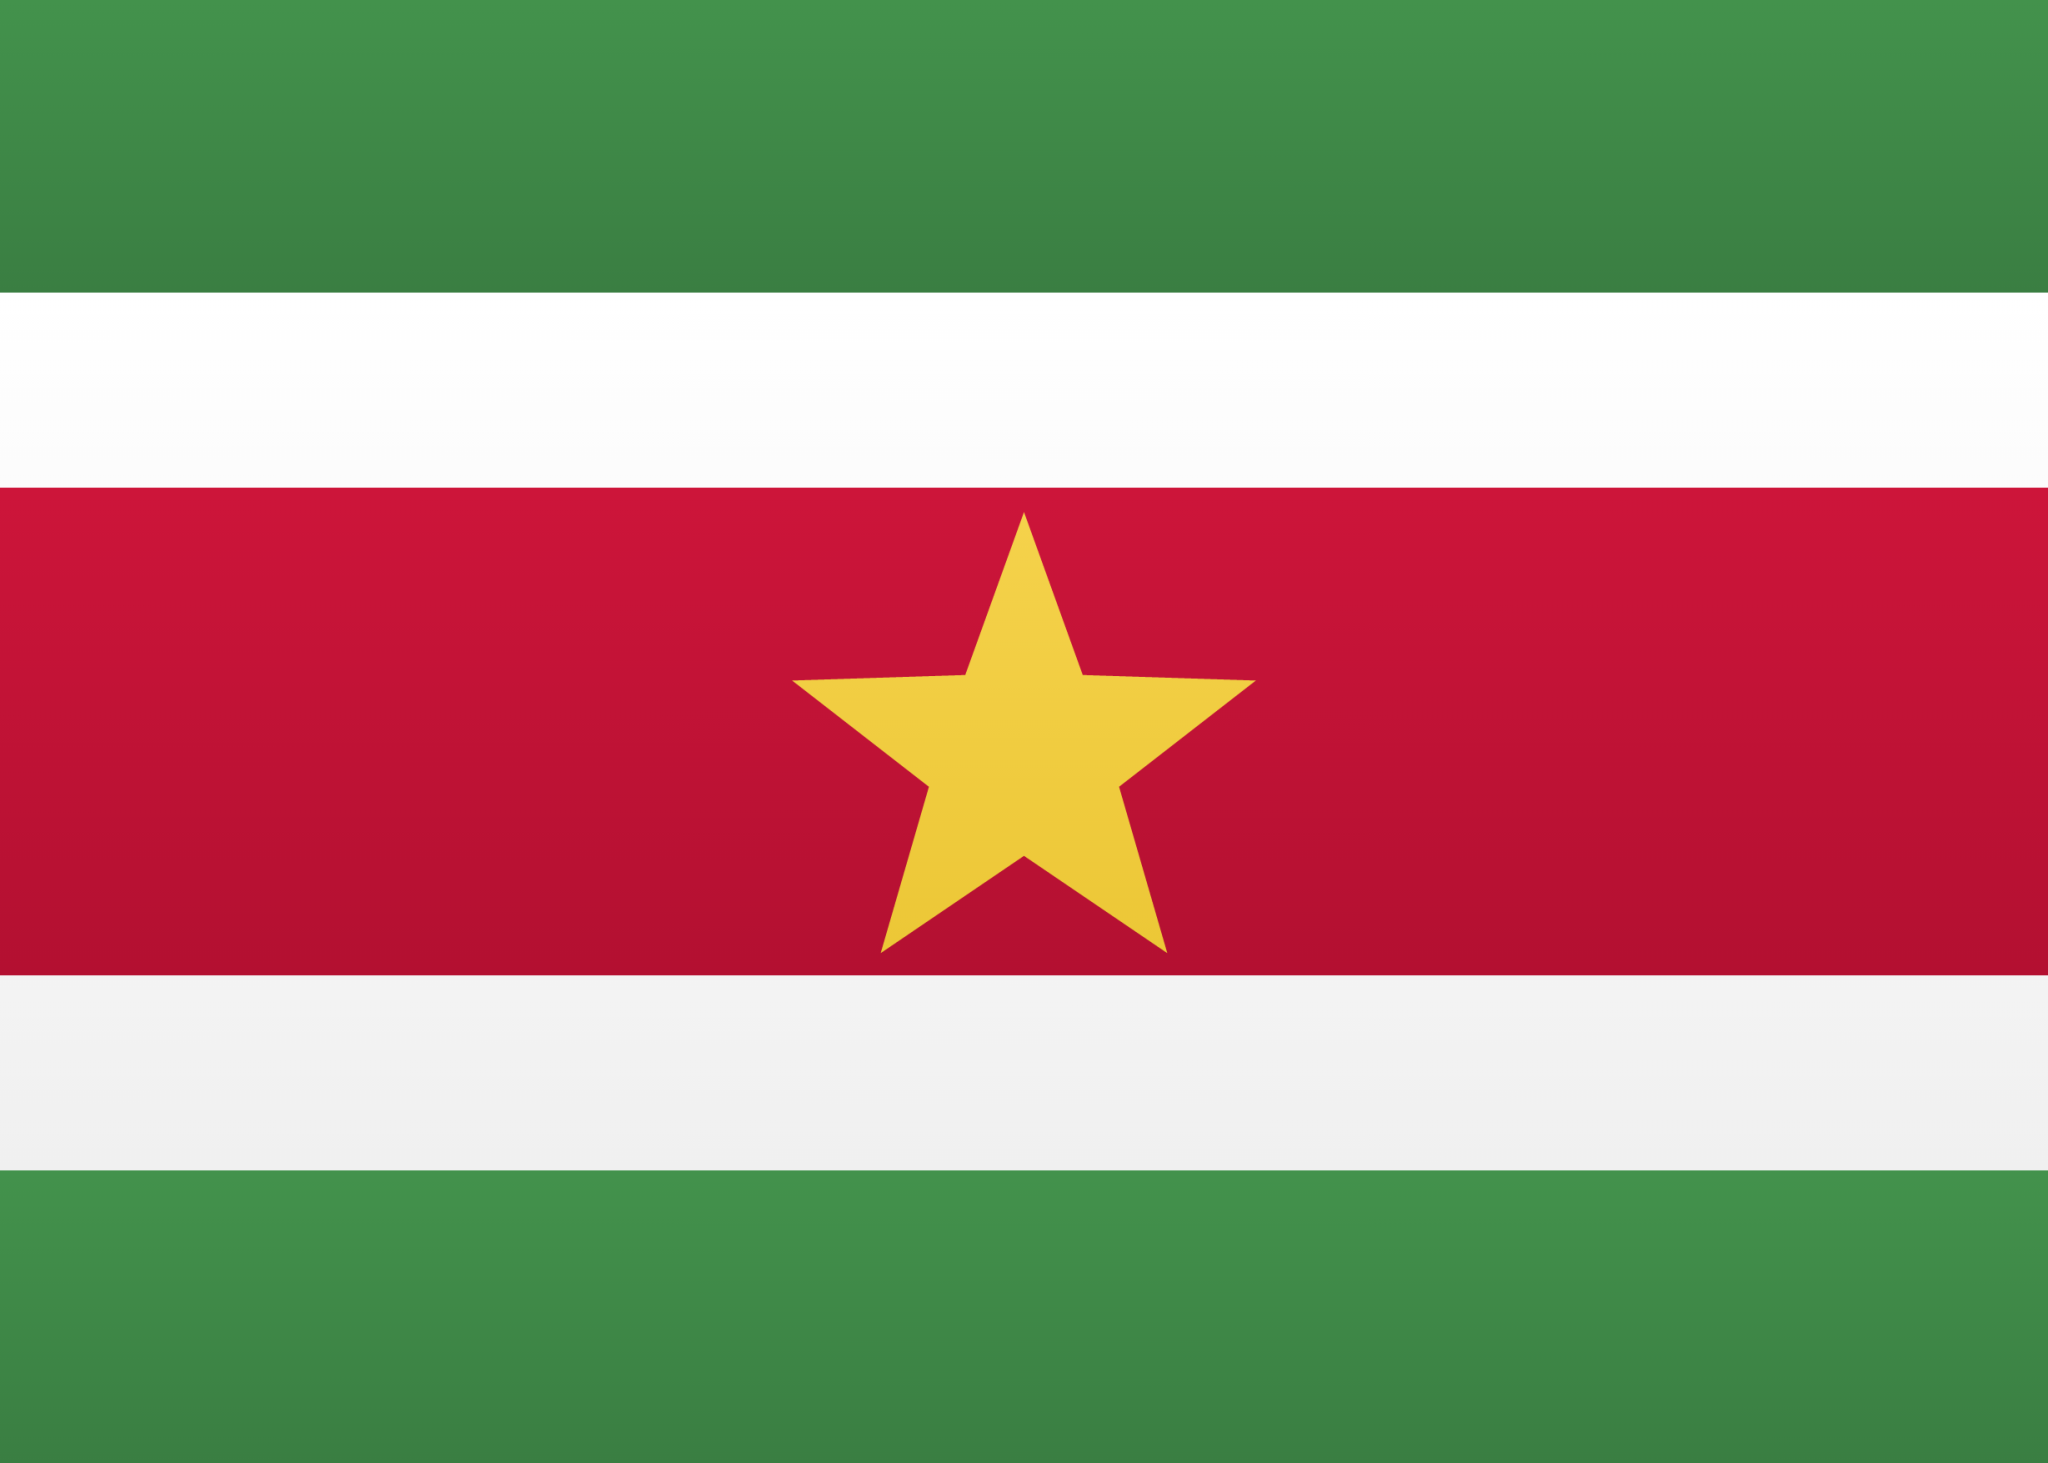 Suriname icon